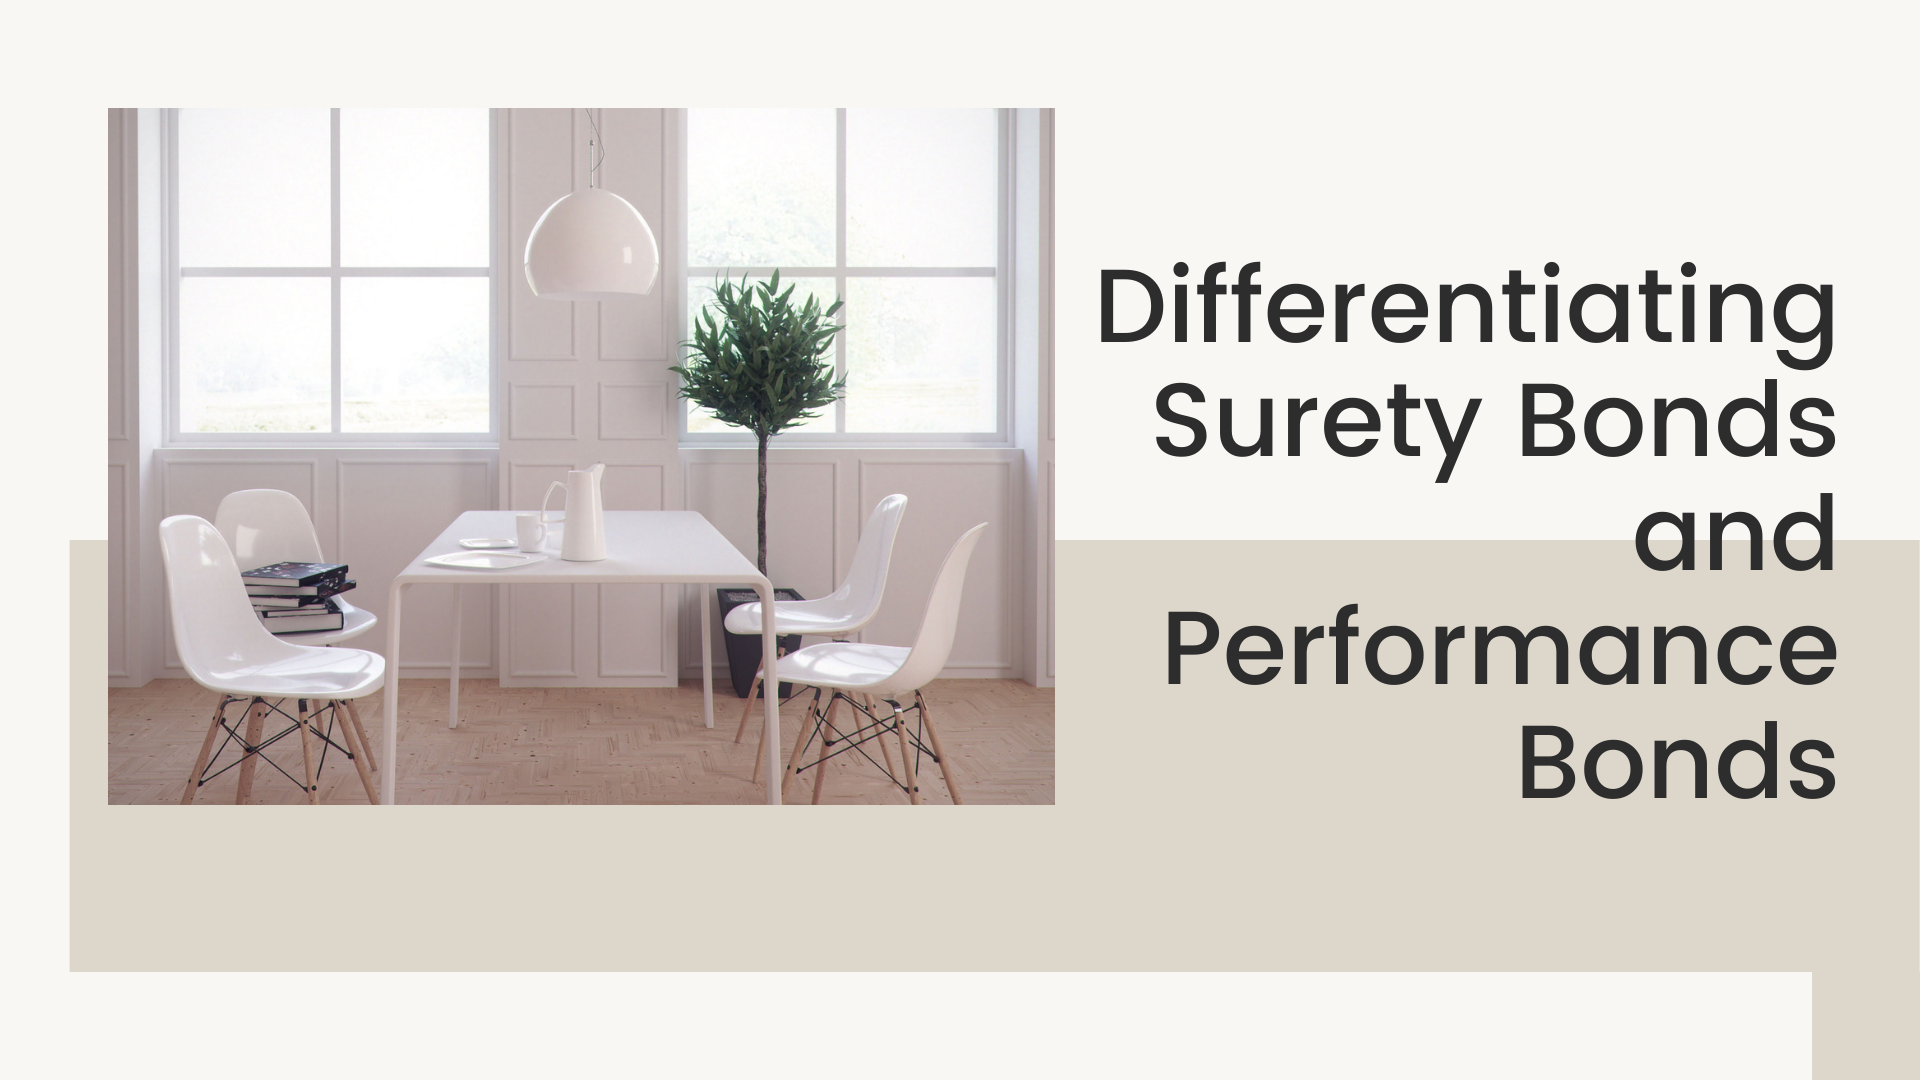 performance bond - What is the definition of a surety bond - minimalist interior design 